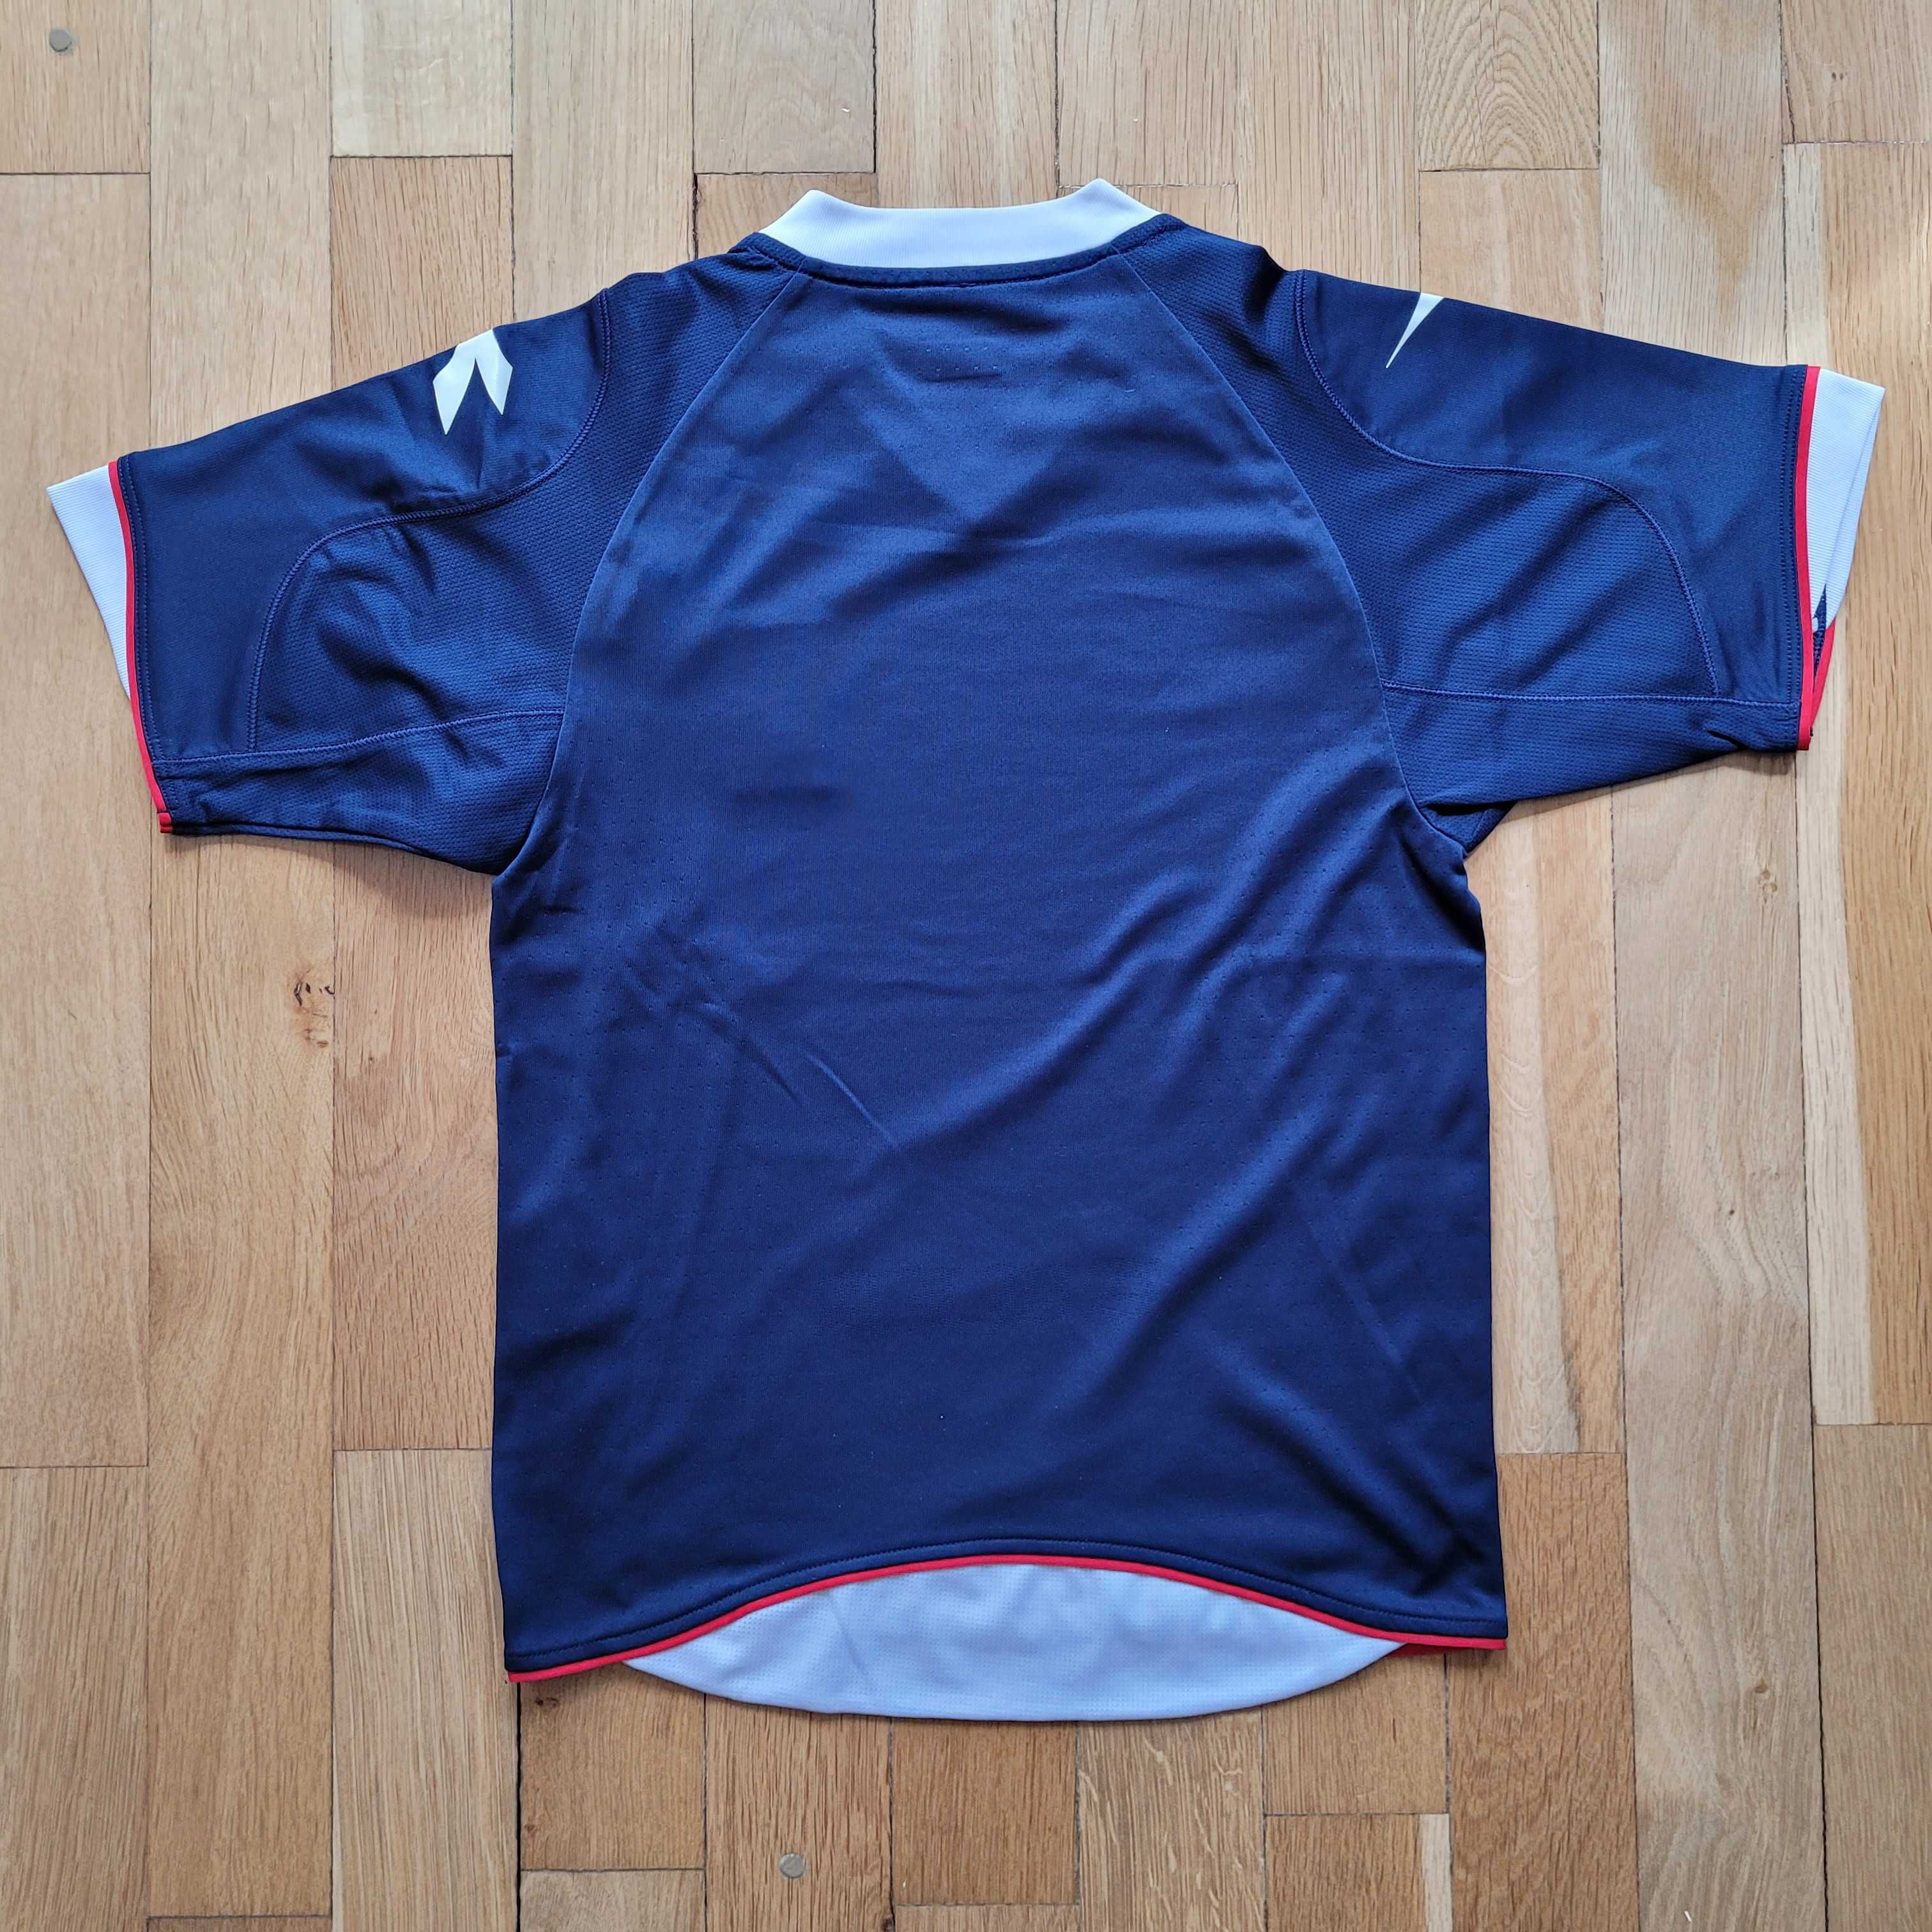 Koszulka sportowa Diadora Scotland r. 122 cm (7-8 lat), nowa bez metki